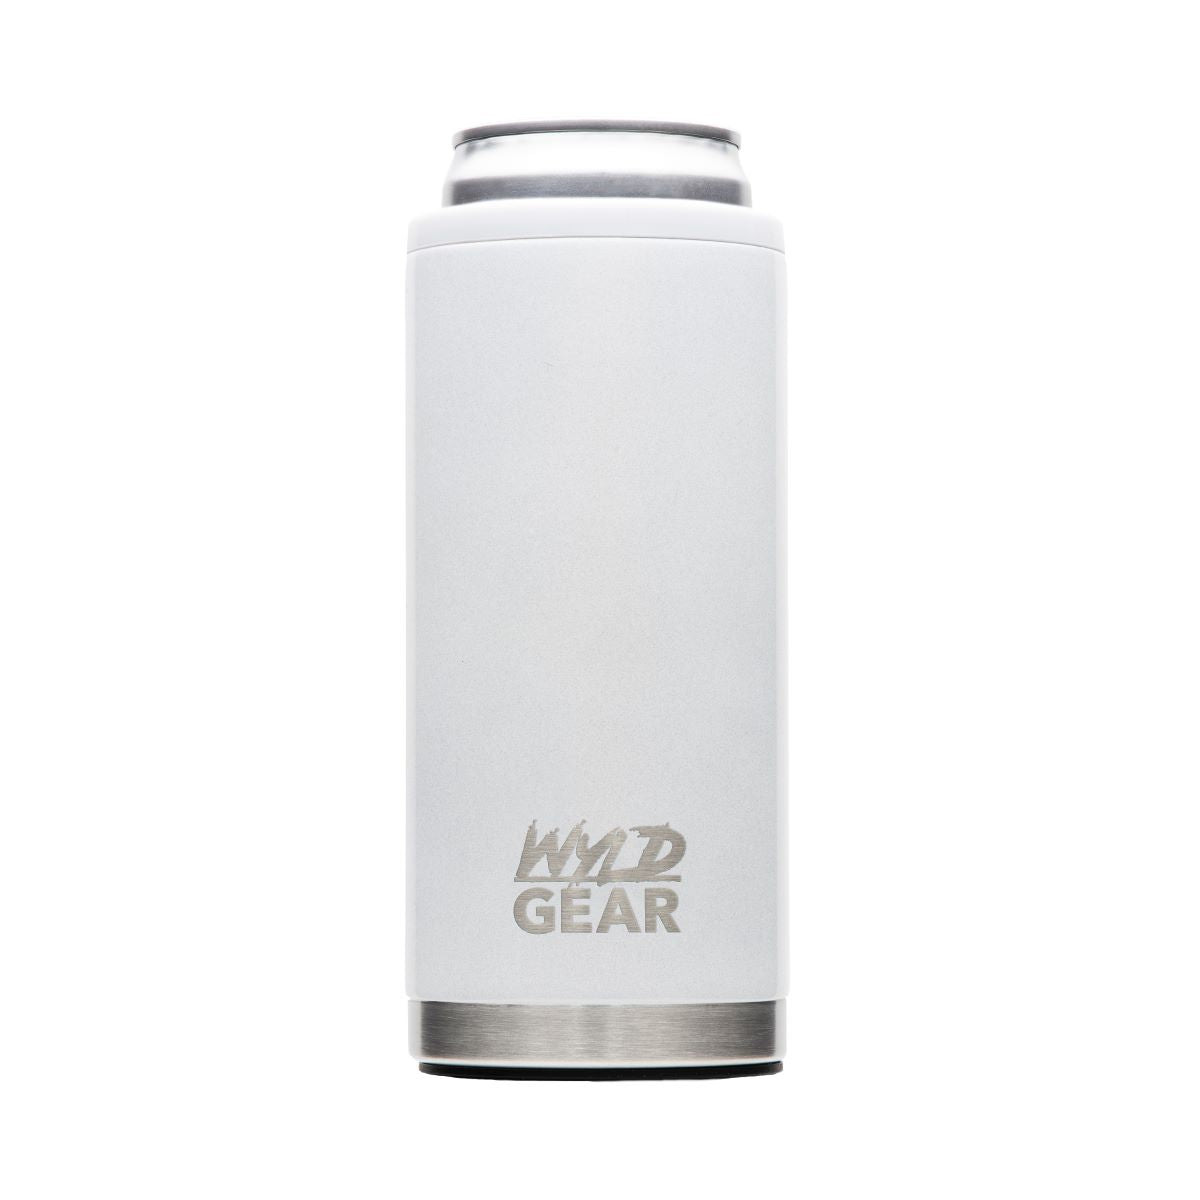 'Wyld Gear' 12 oz. Slim Can Holder - White